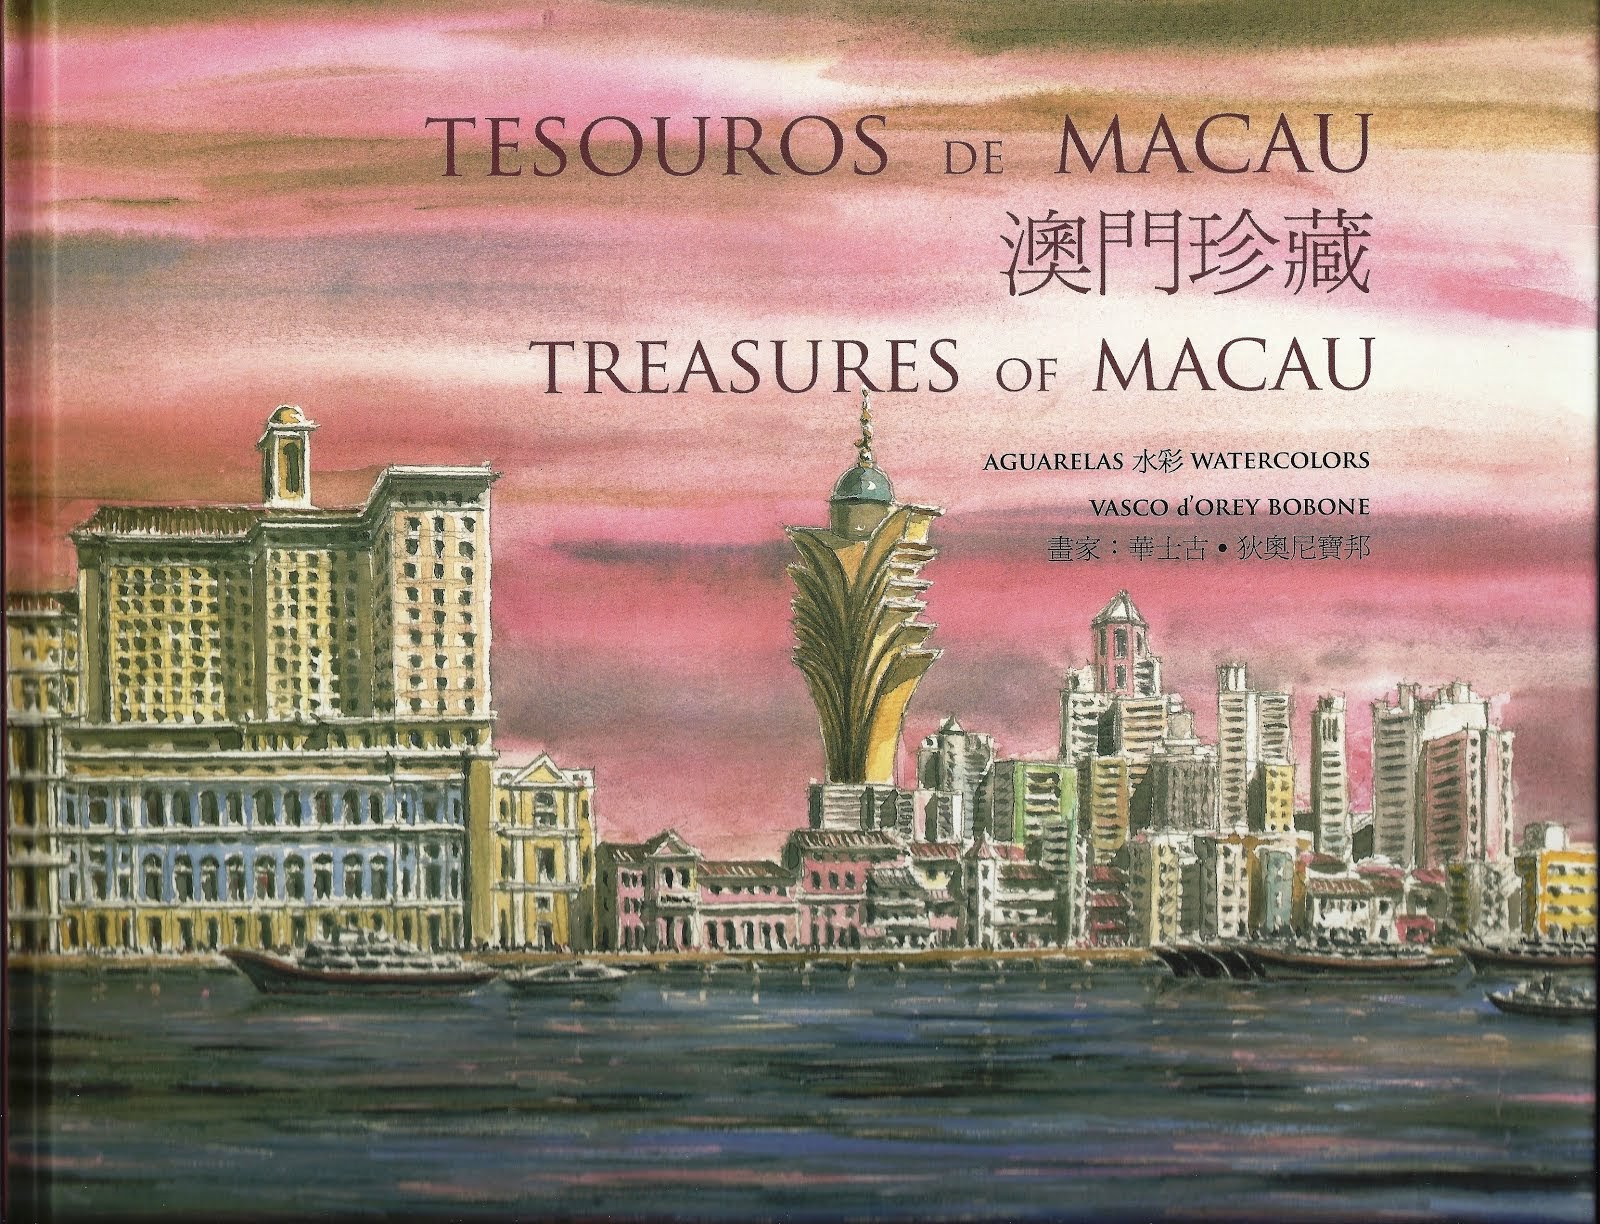 Tesouros de Macau. Treasures of Macau